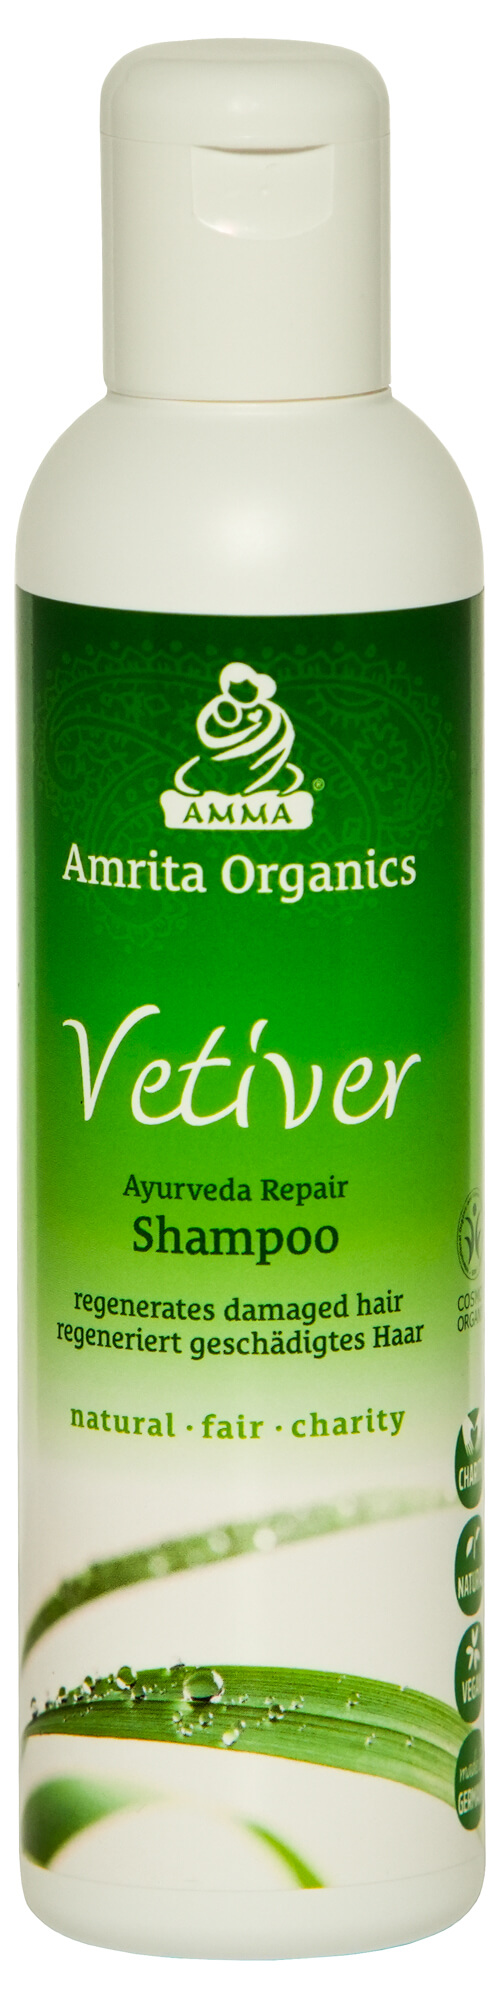 Ayurveda Repair Shampoo Vetiver